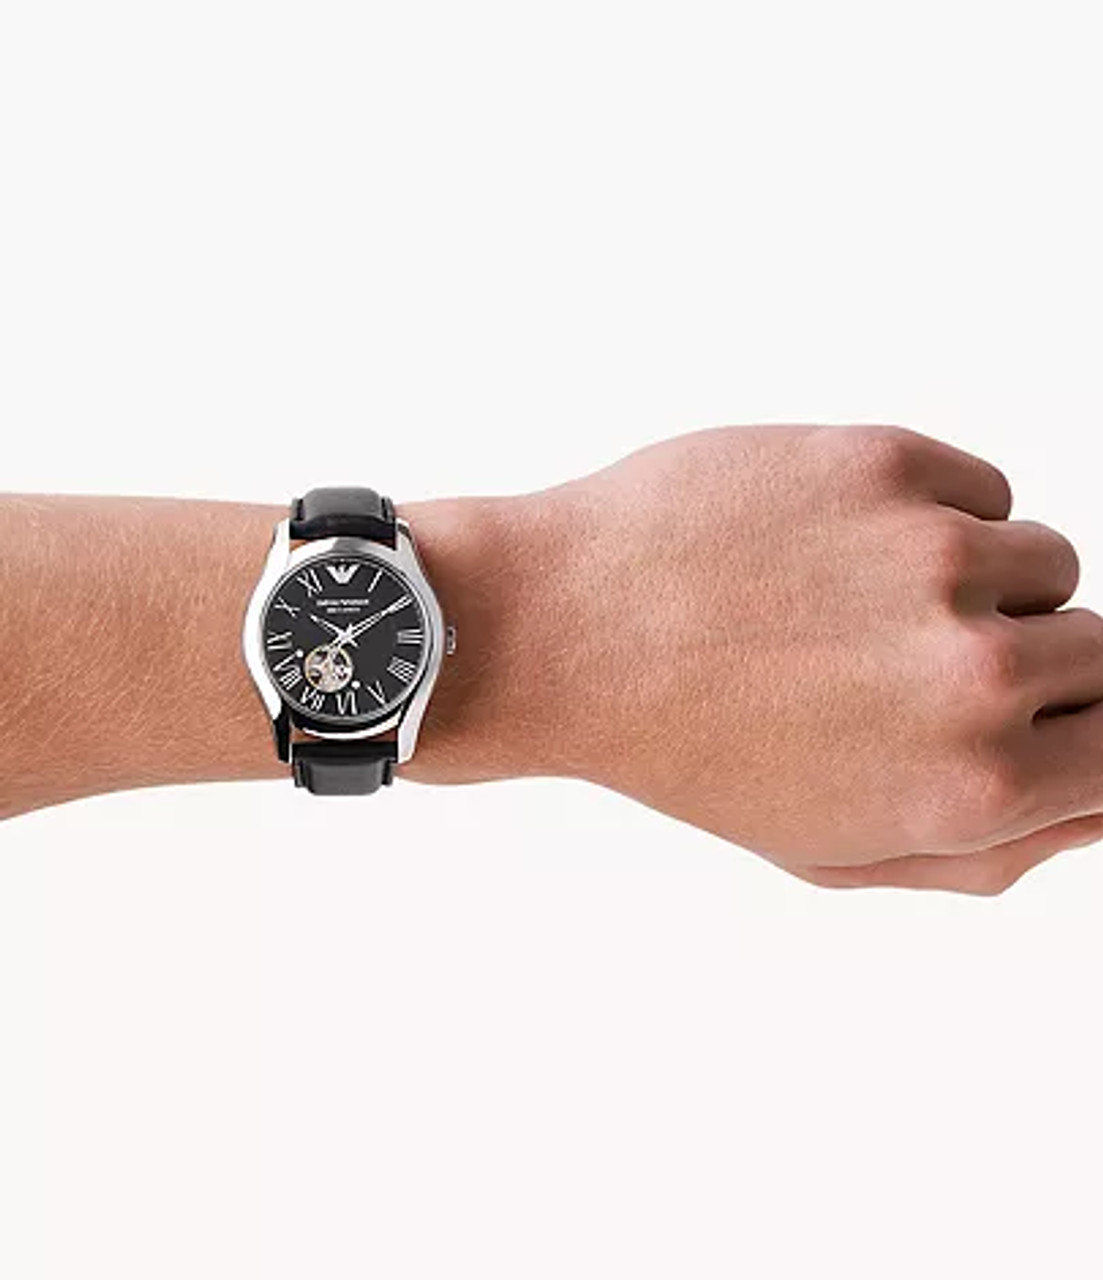 EMPORIO ARMANI Automatic Black Leather Watch